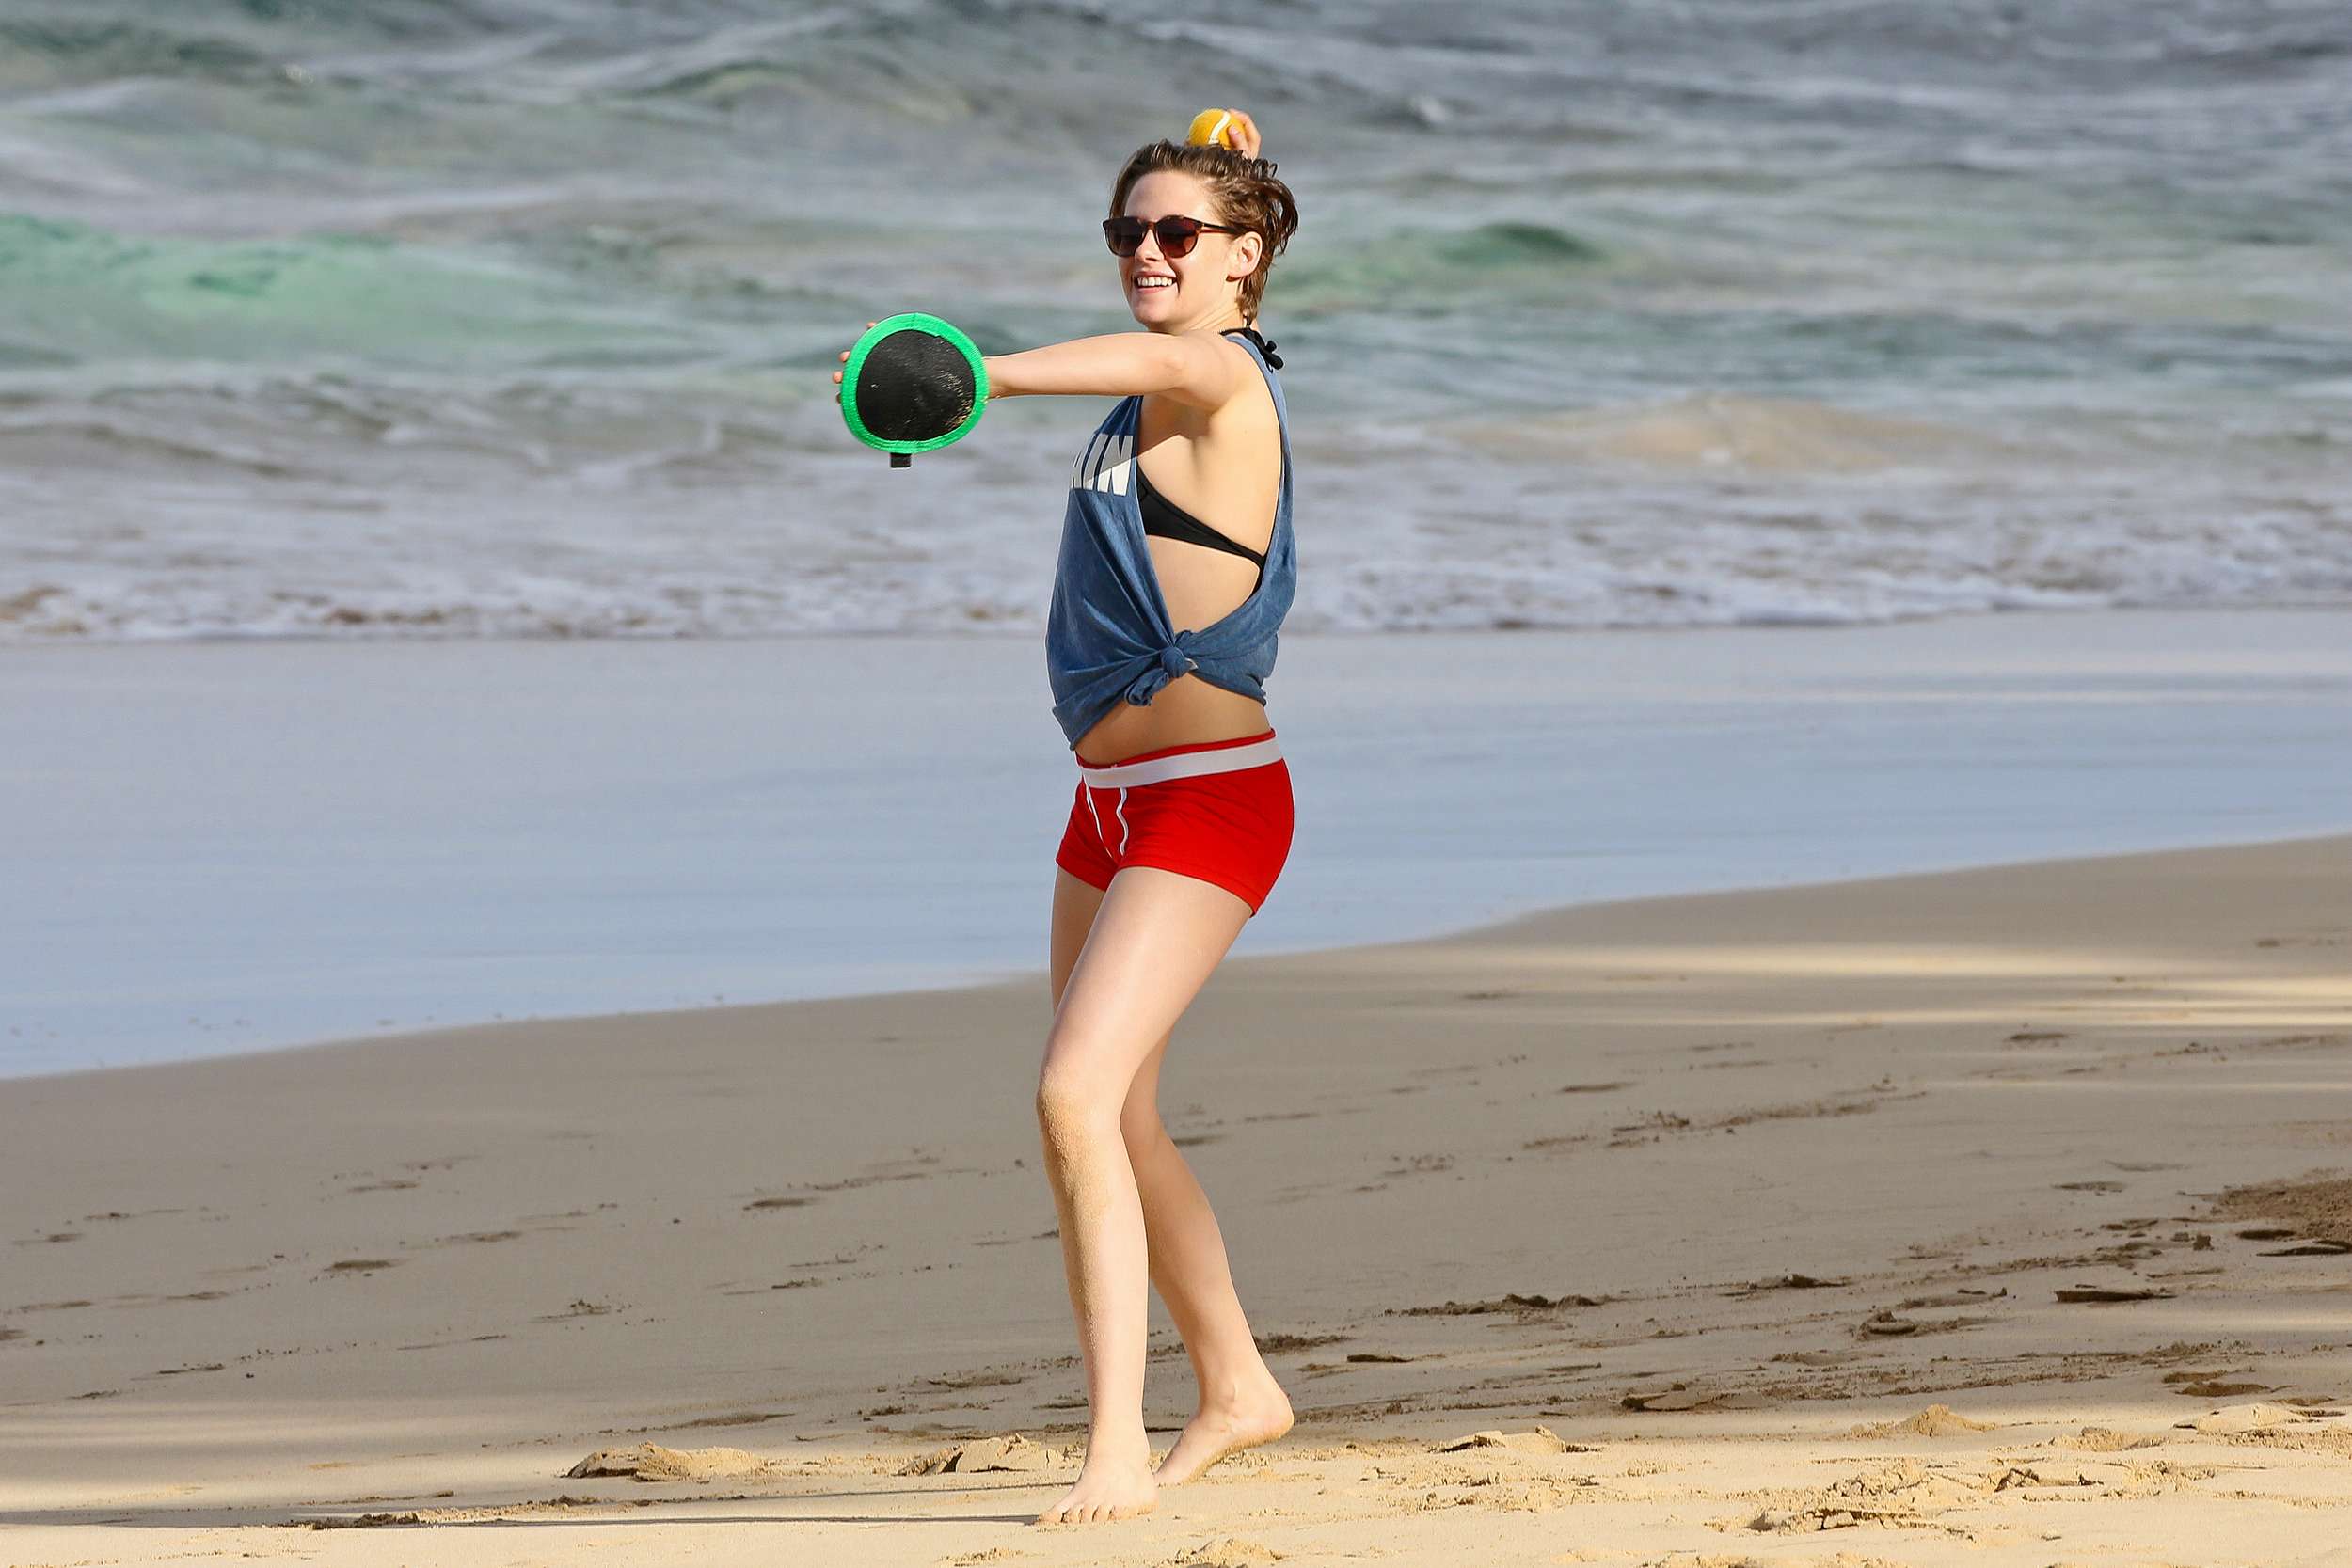 In Hawaii - January 1 - 13 - Kristen Stewart Pictures.